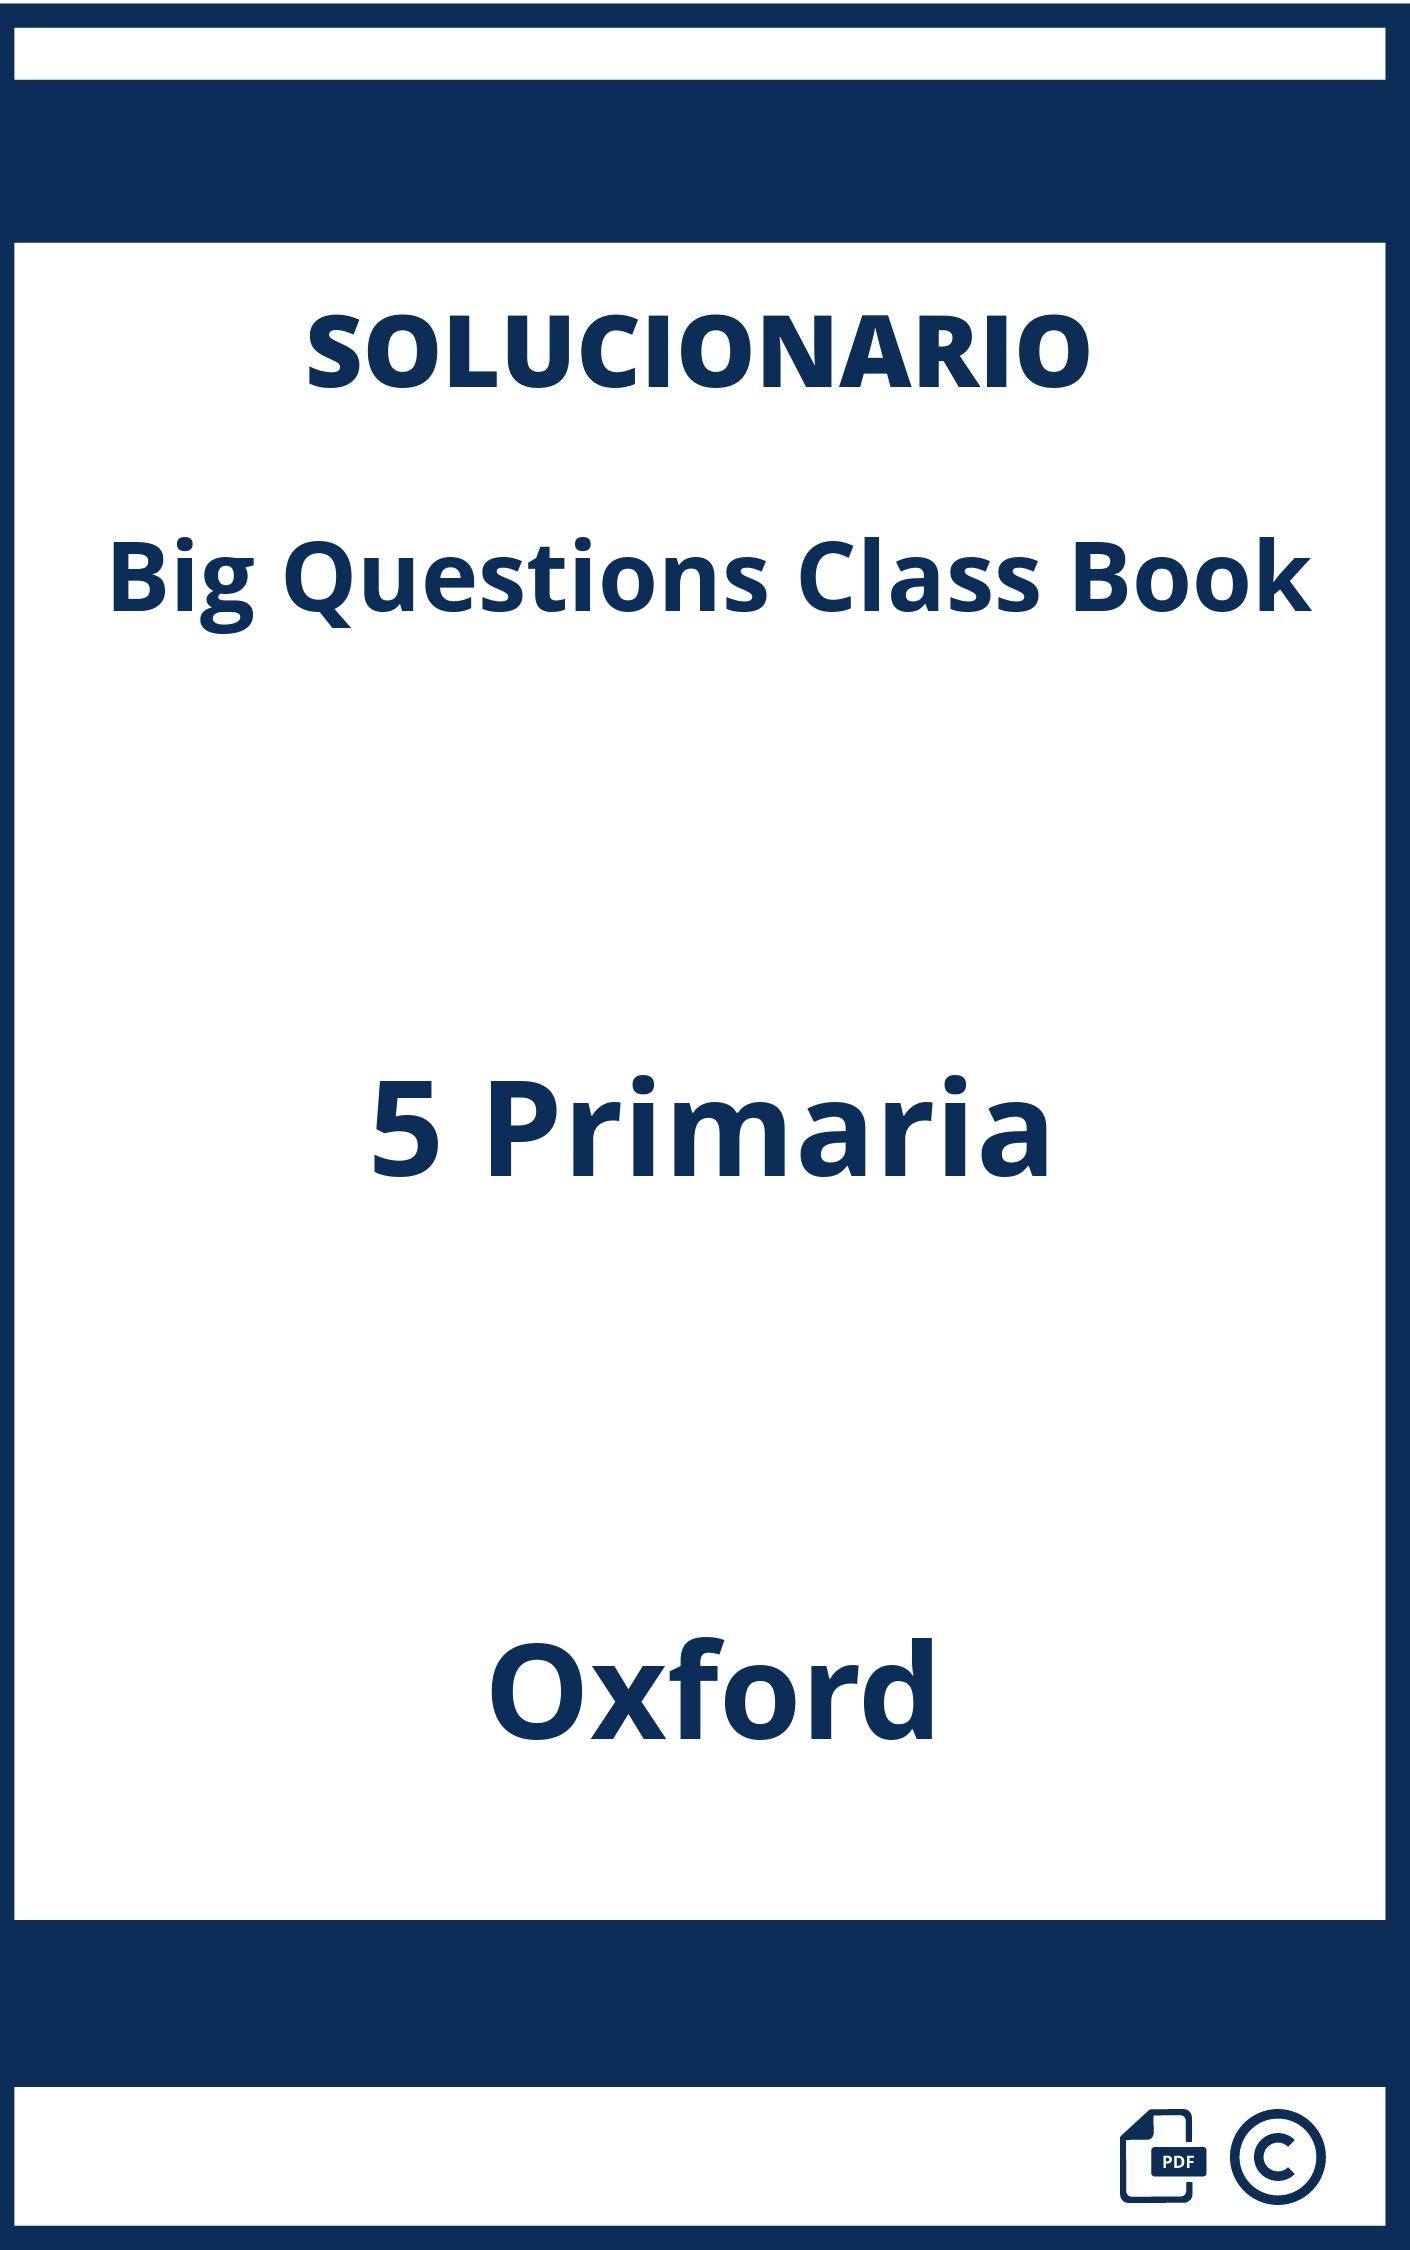 Solucionario Big Questions Class Book 5 Primaria Oxford